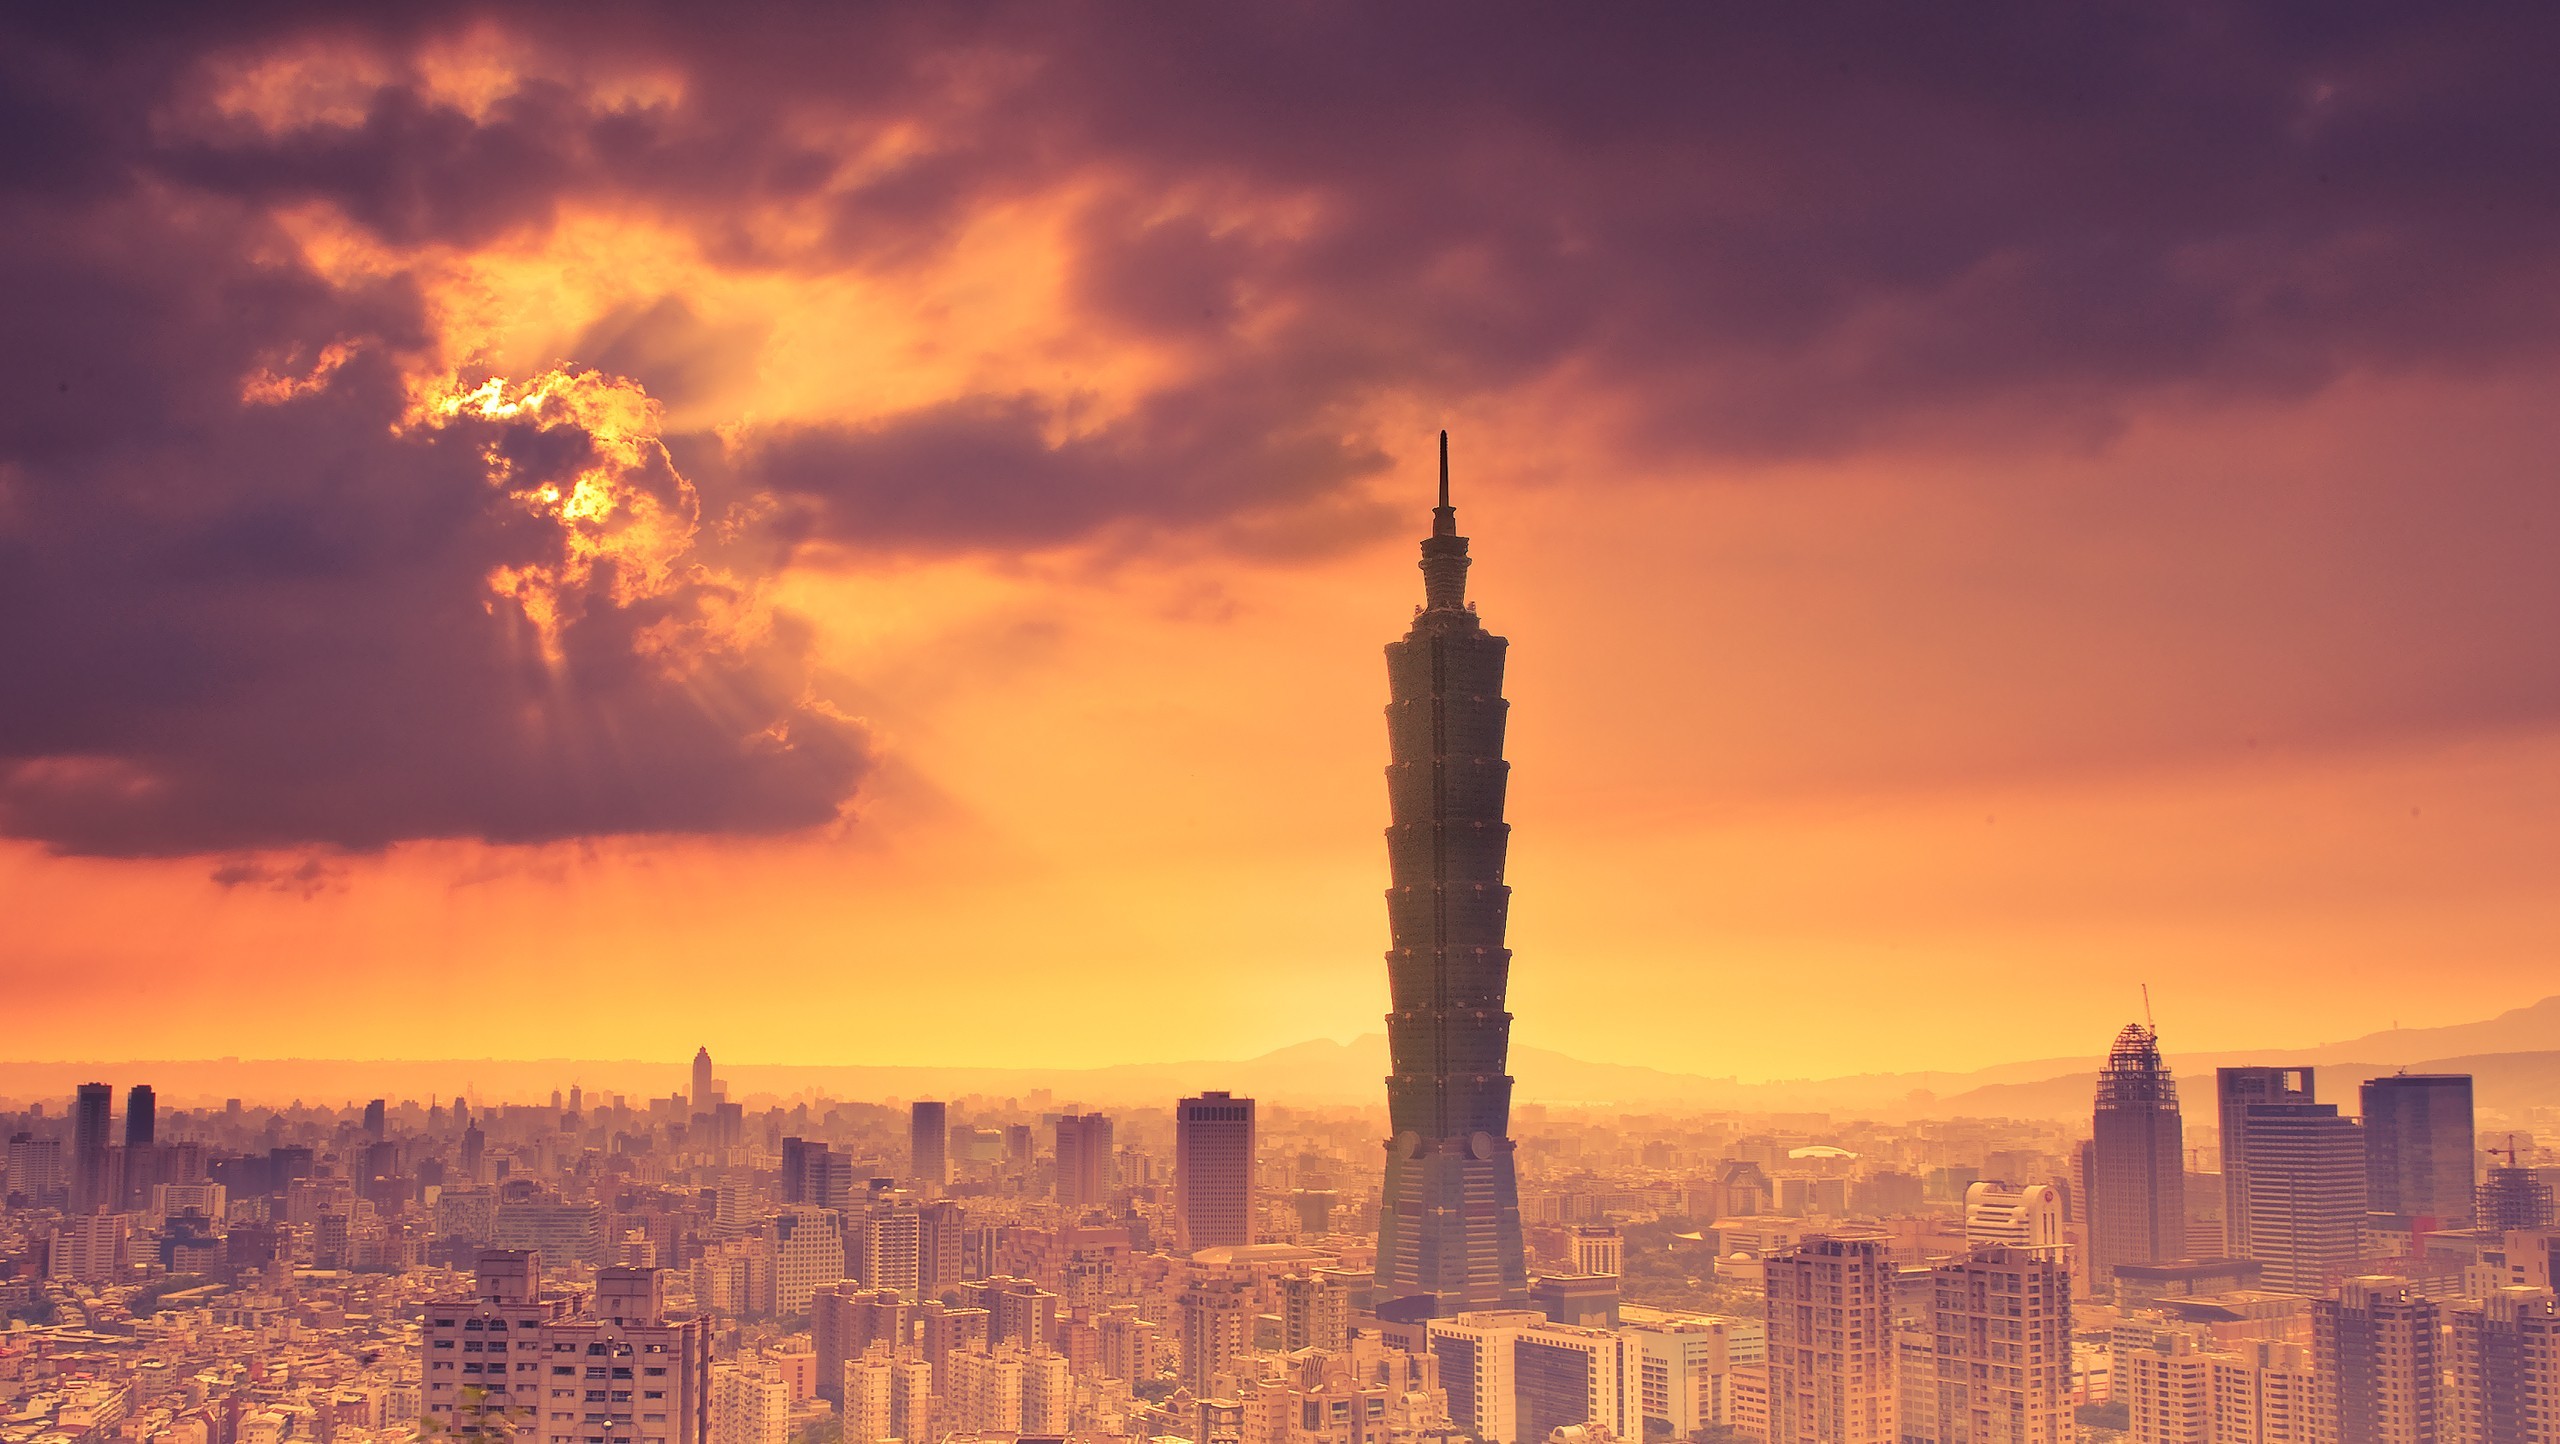 General 2560x1444 Taipei 101 cityscape clouds sunlight tower orange Taipei